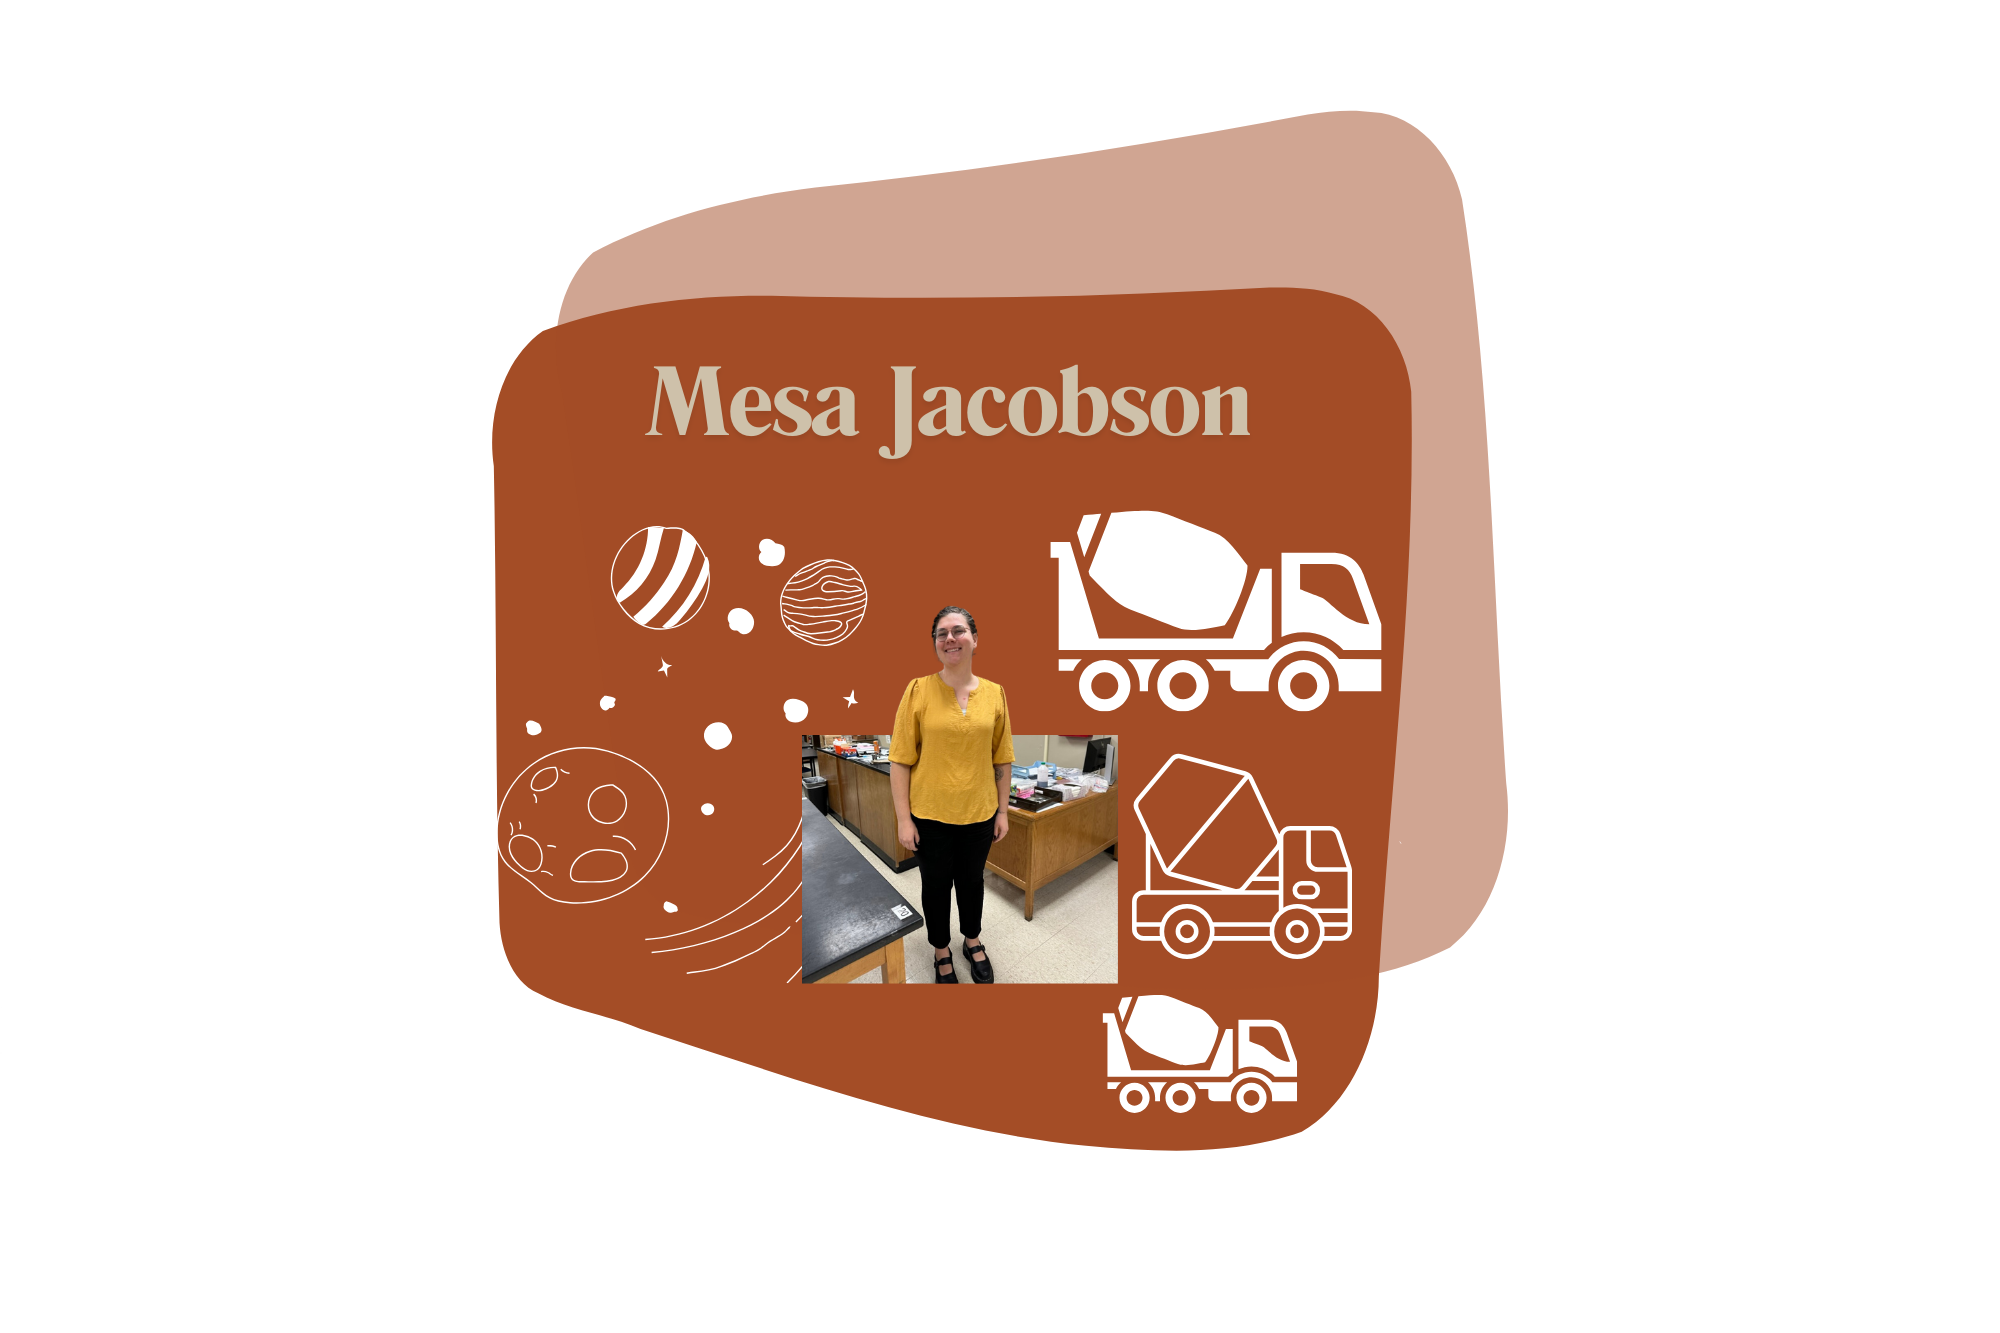 Mesa Jacobson